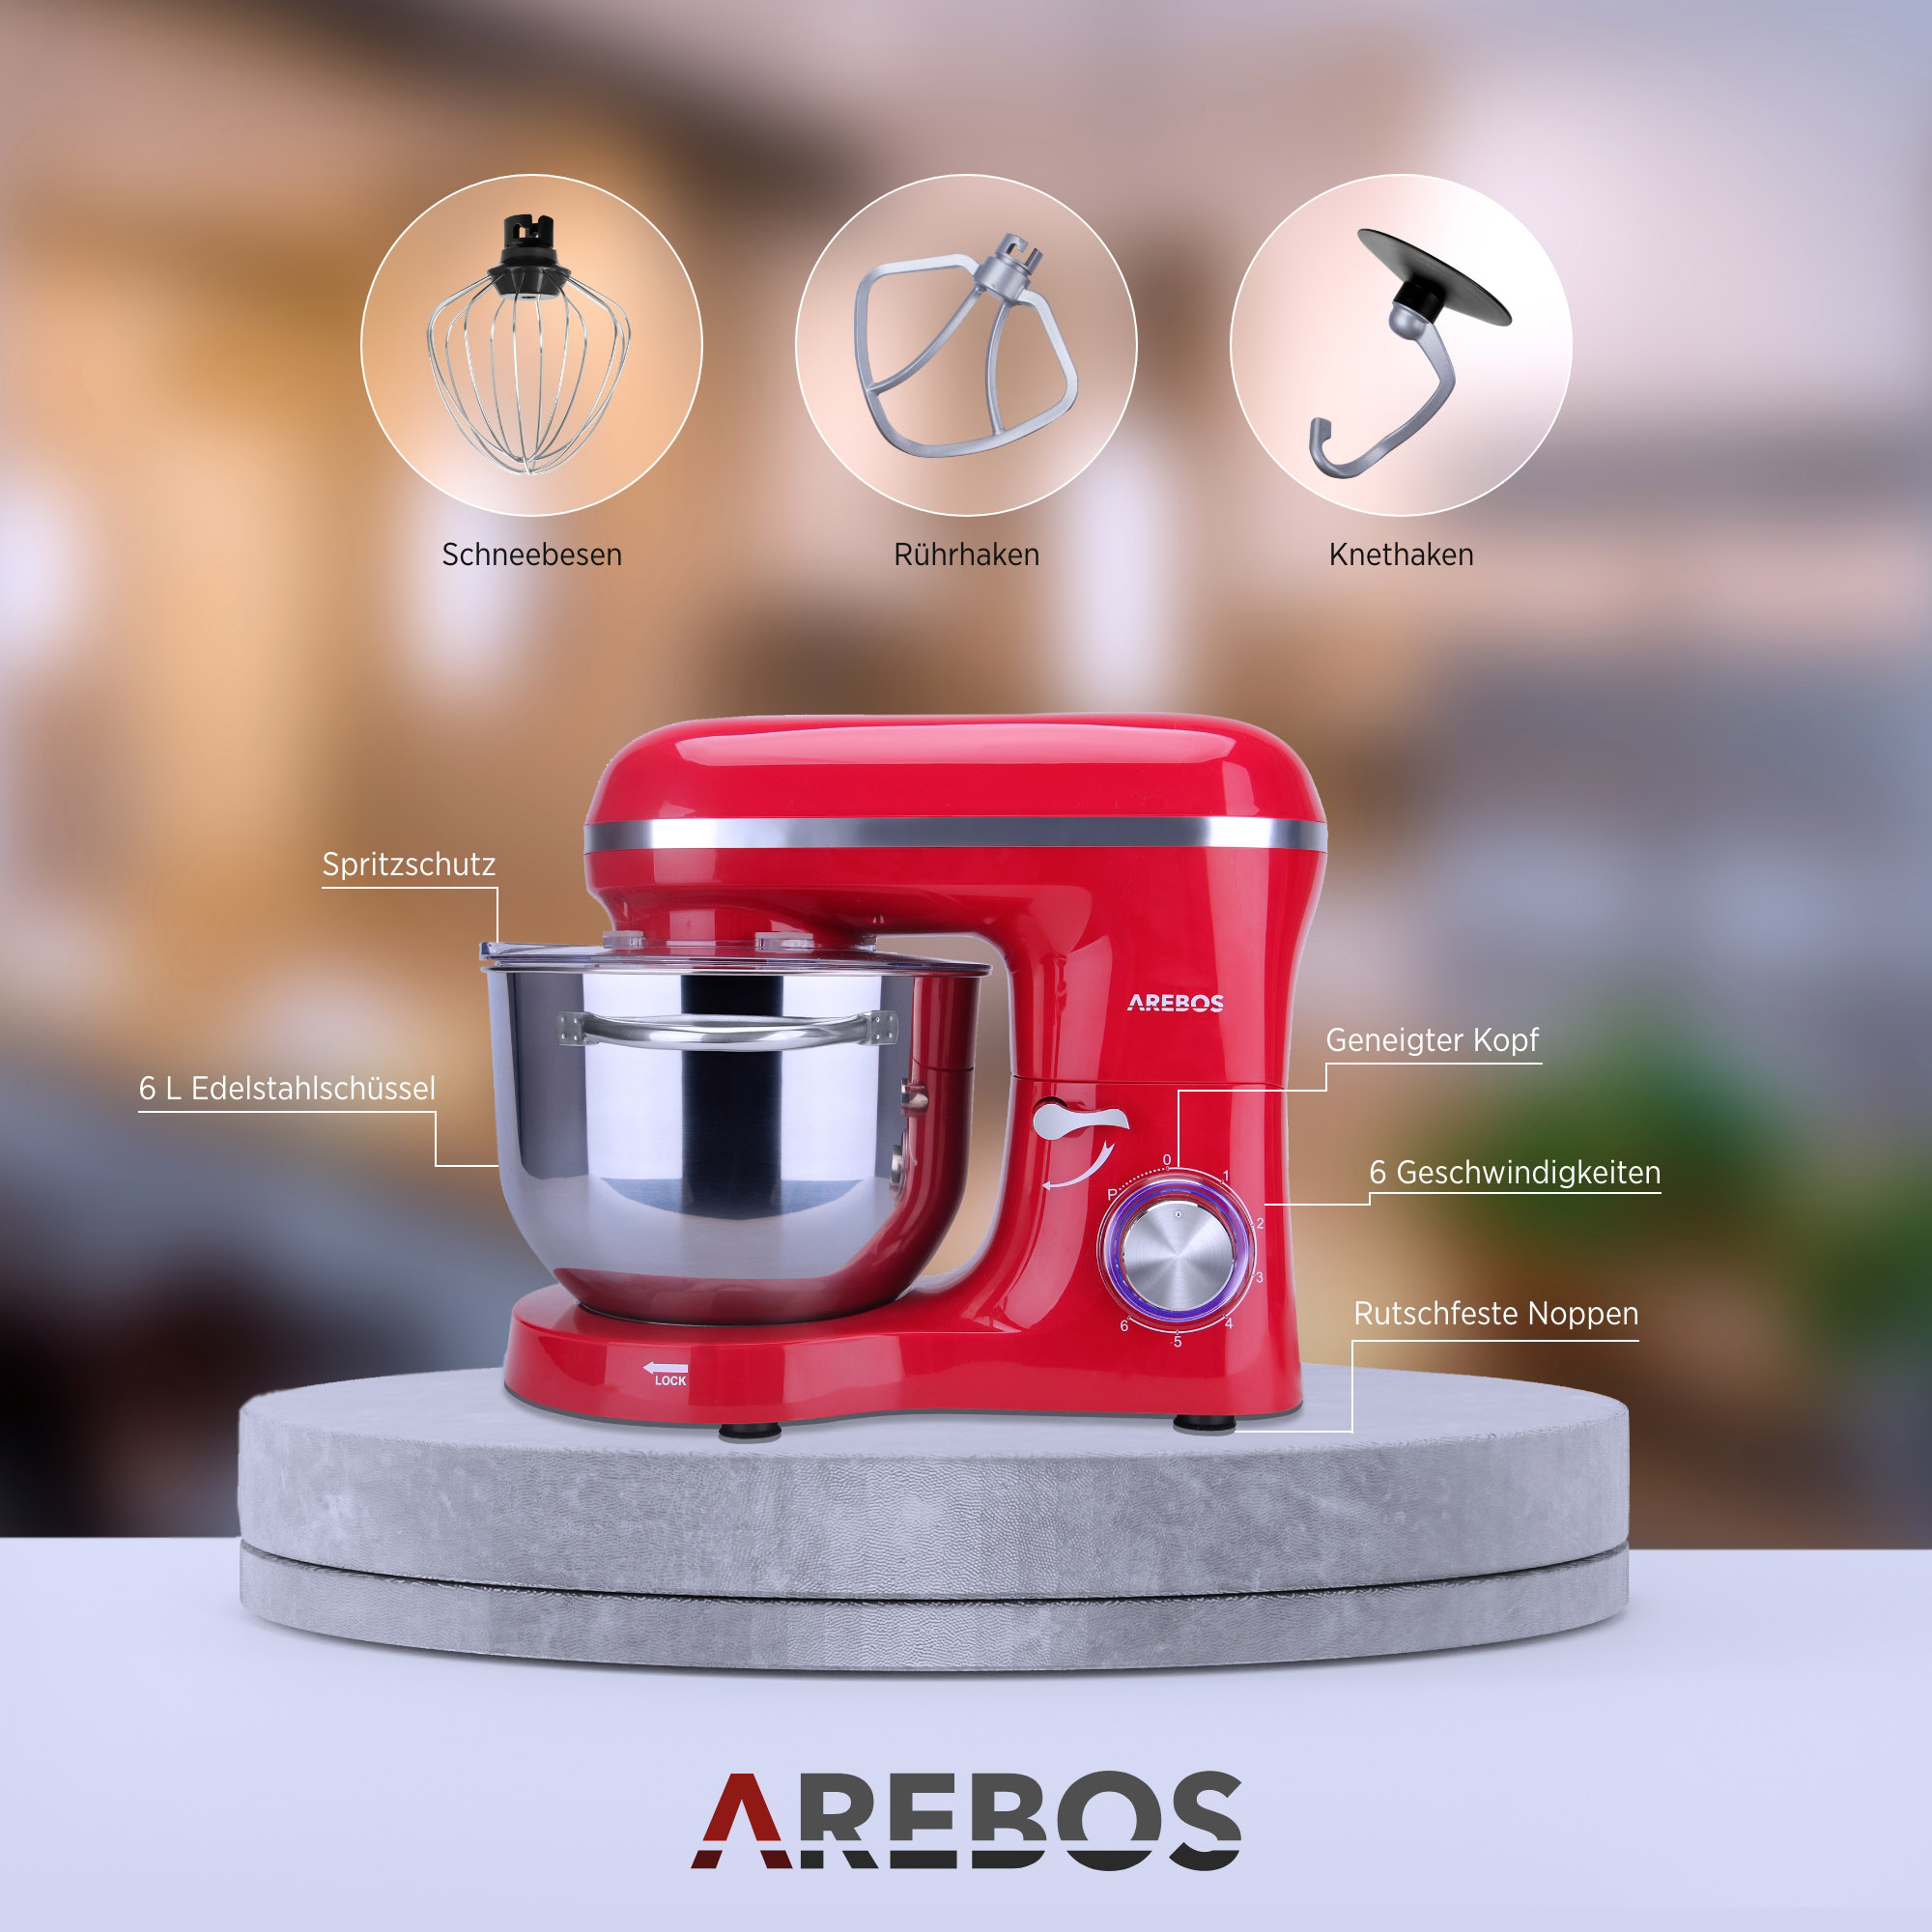 6 6 AREBOS Watt) Speedlevels Küchenmaschine Rot Liter, 1500 (Rührschüsselkapazität: